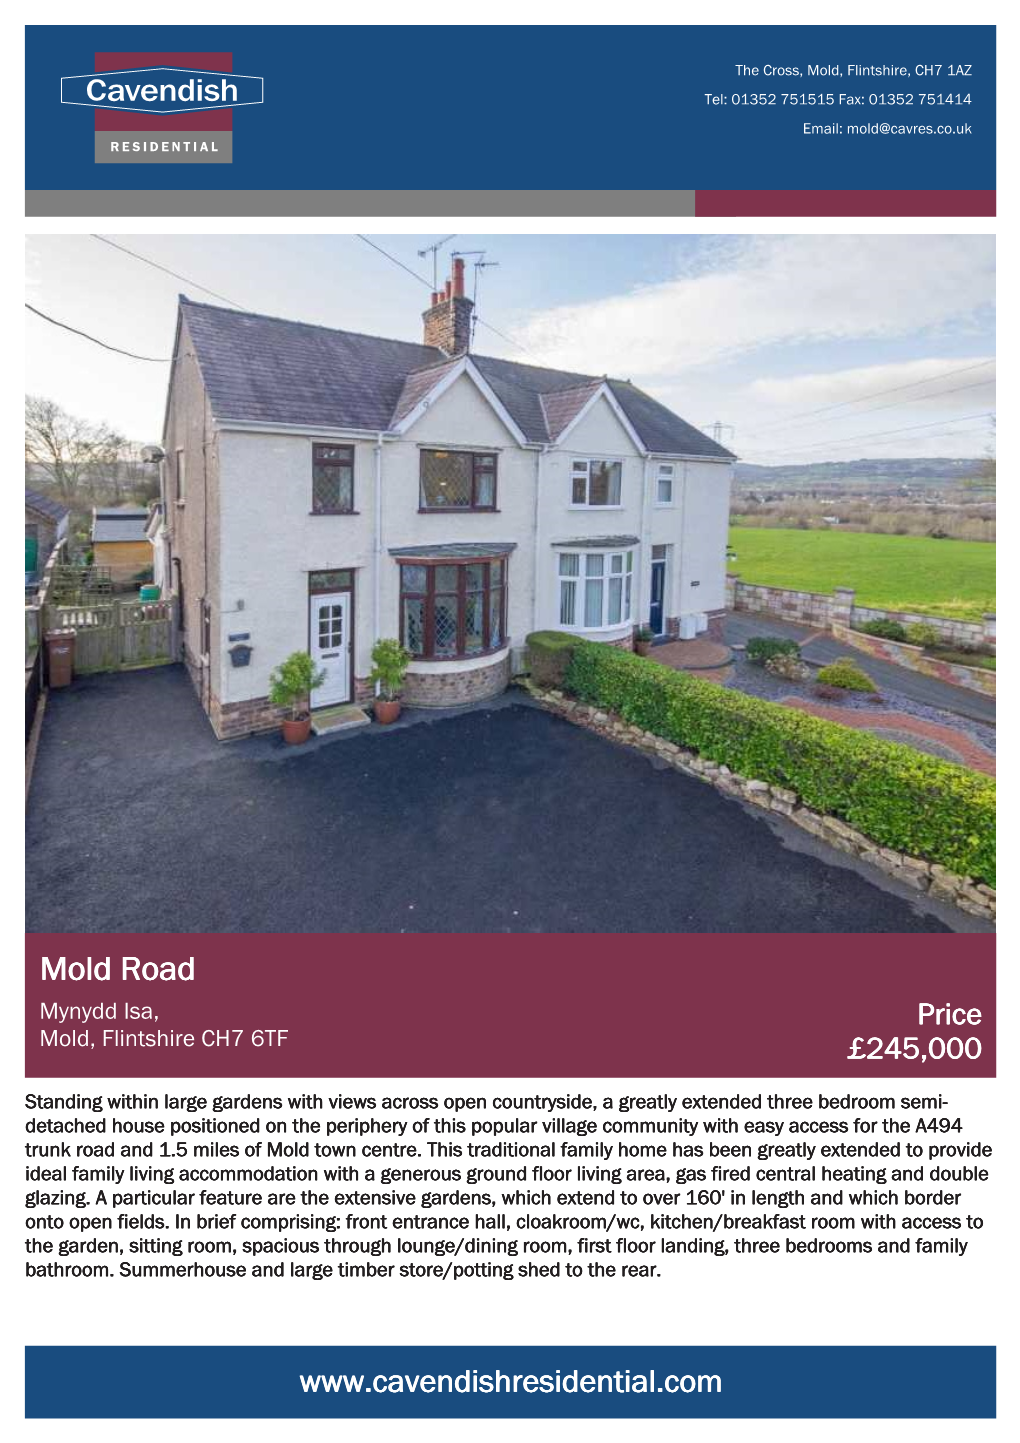 Mold Road Mynydd Isa, Price Mold, Flintshire CH7 6TF £245,000